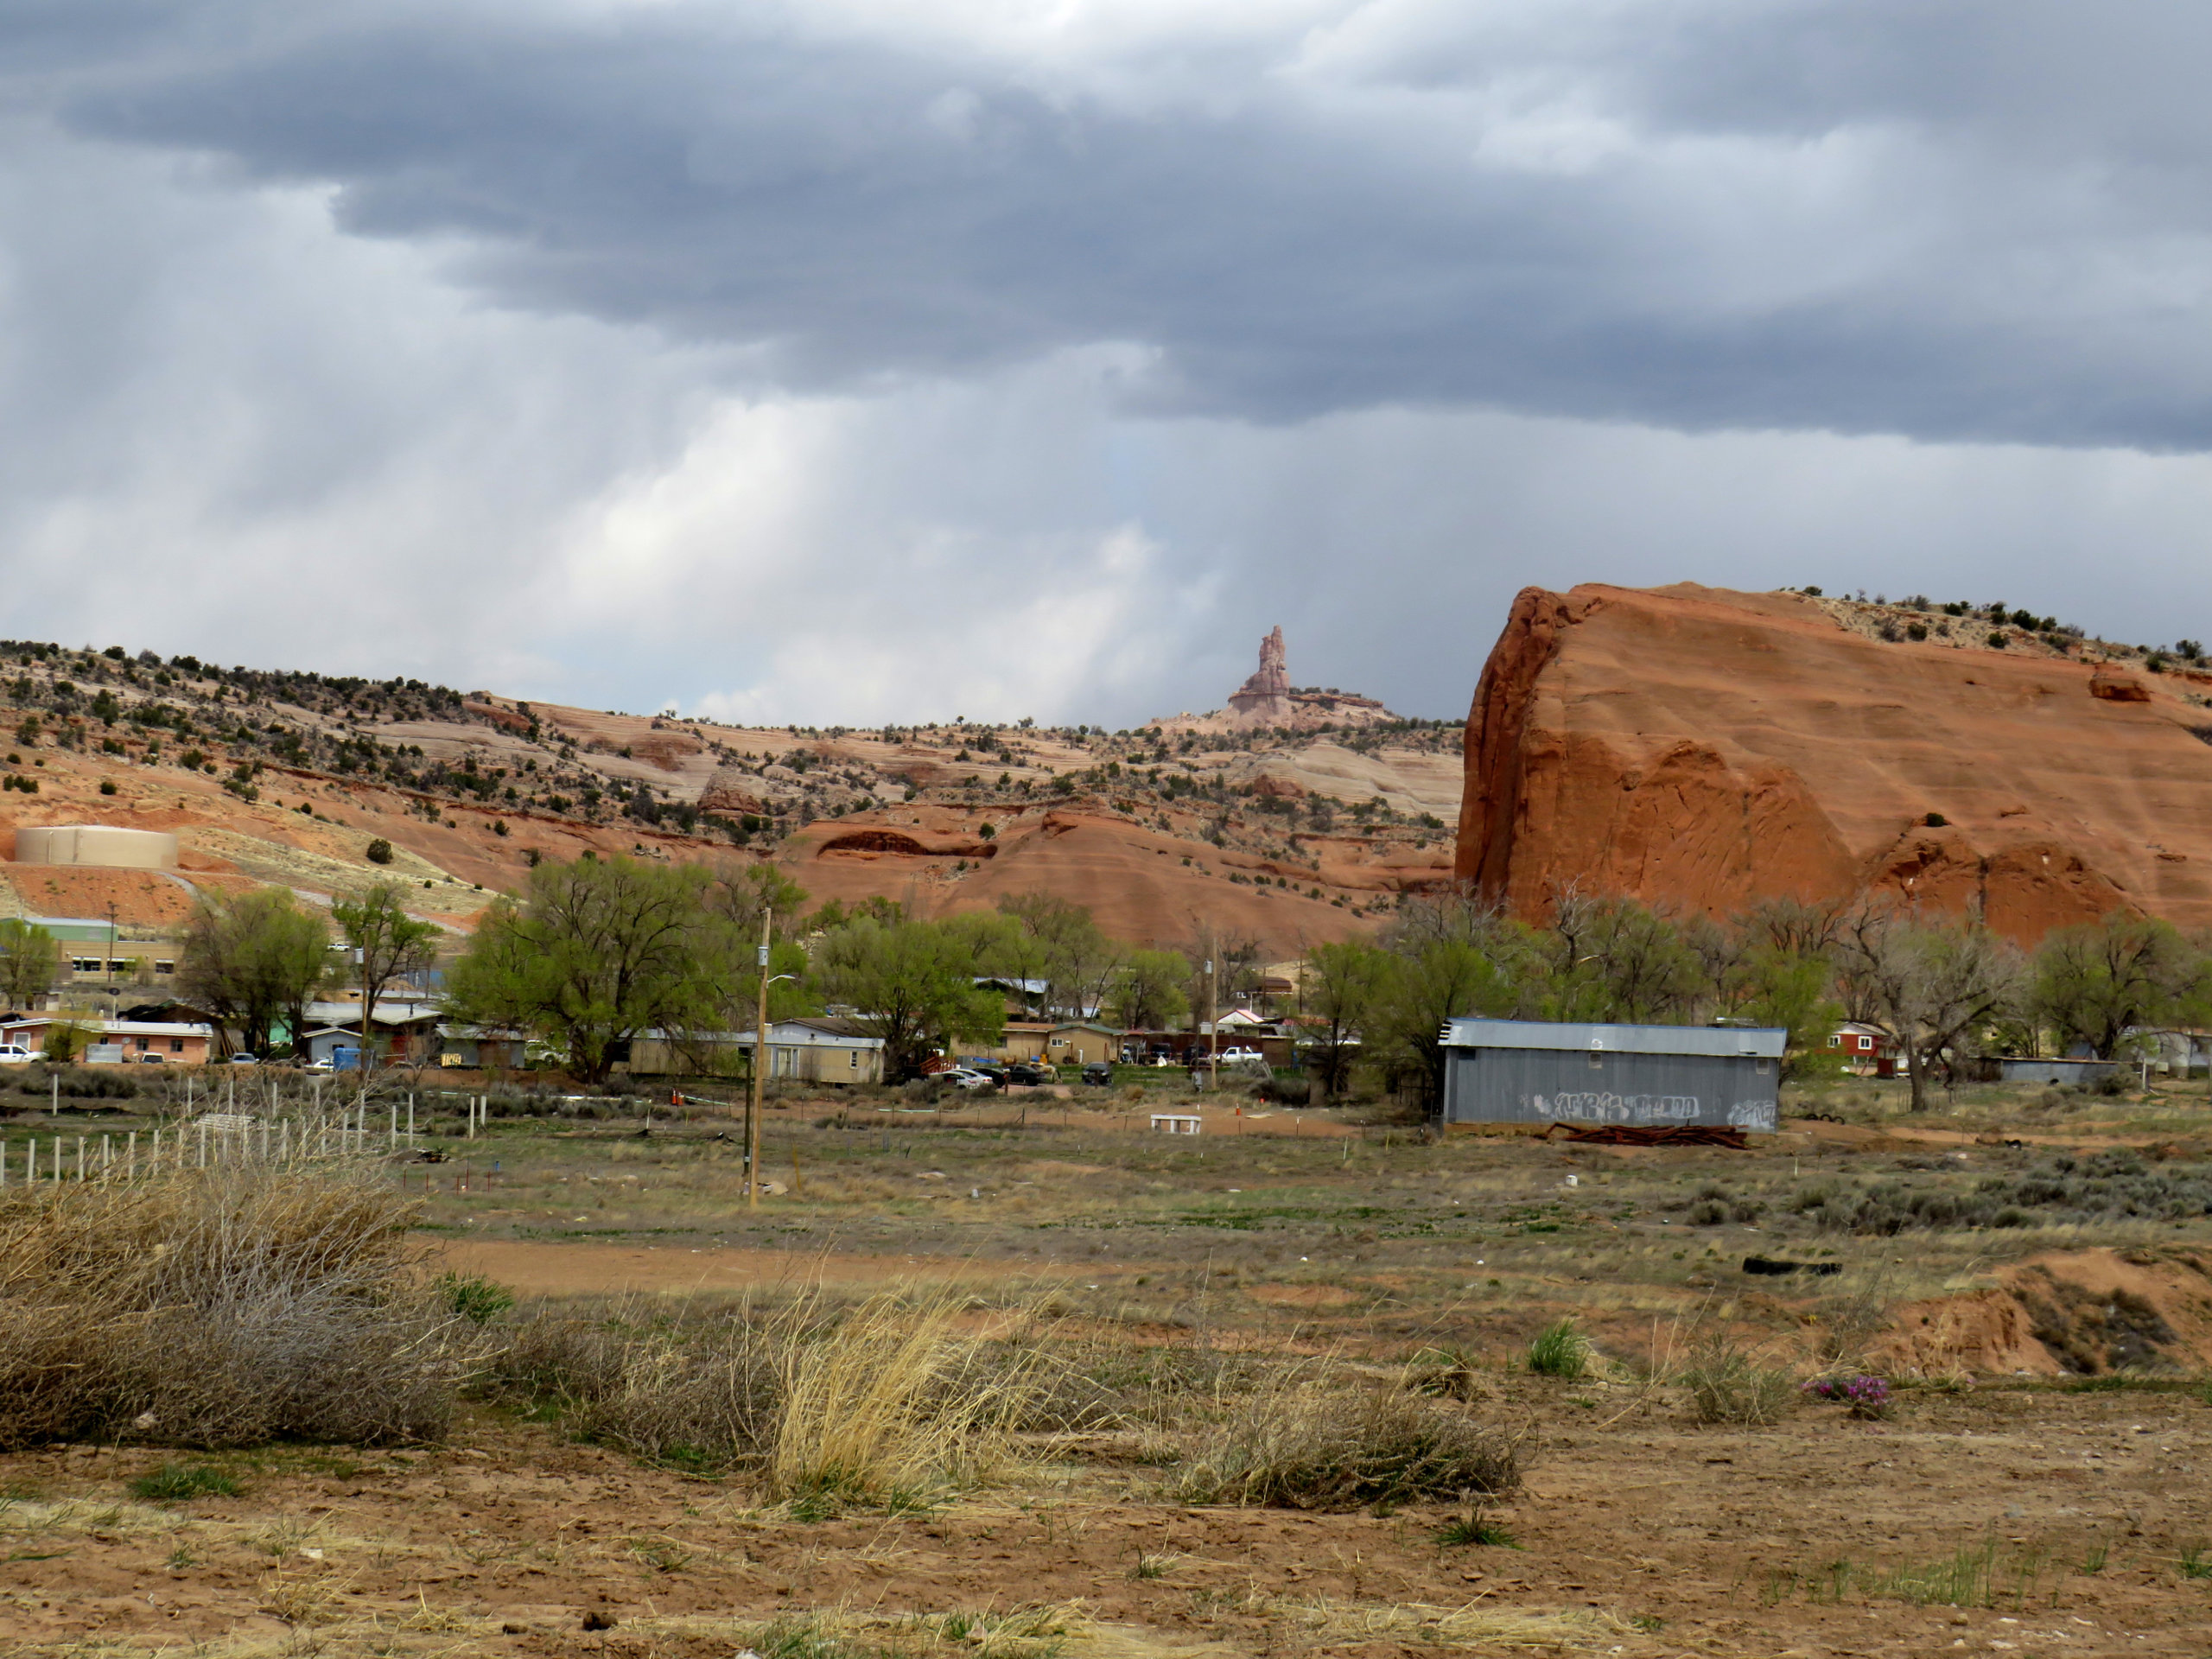 Navajo Nation officials, activists feel cut out as company advances uranium mining plans